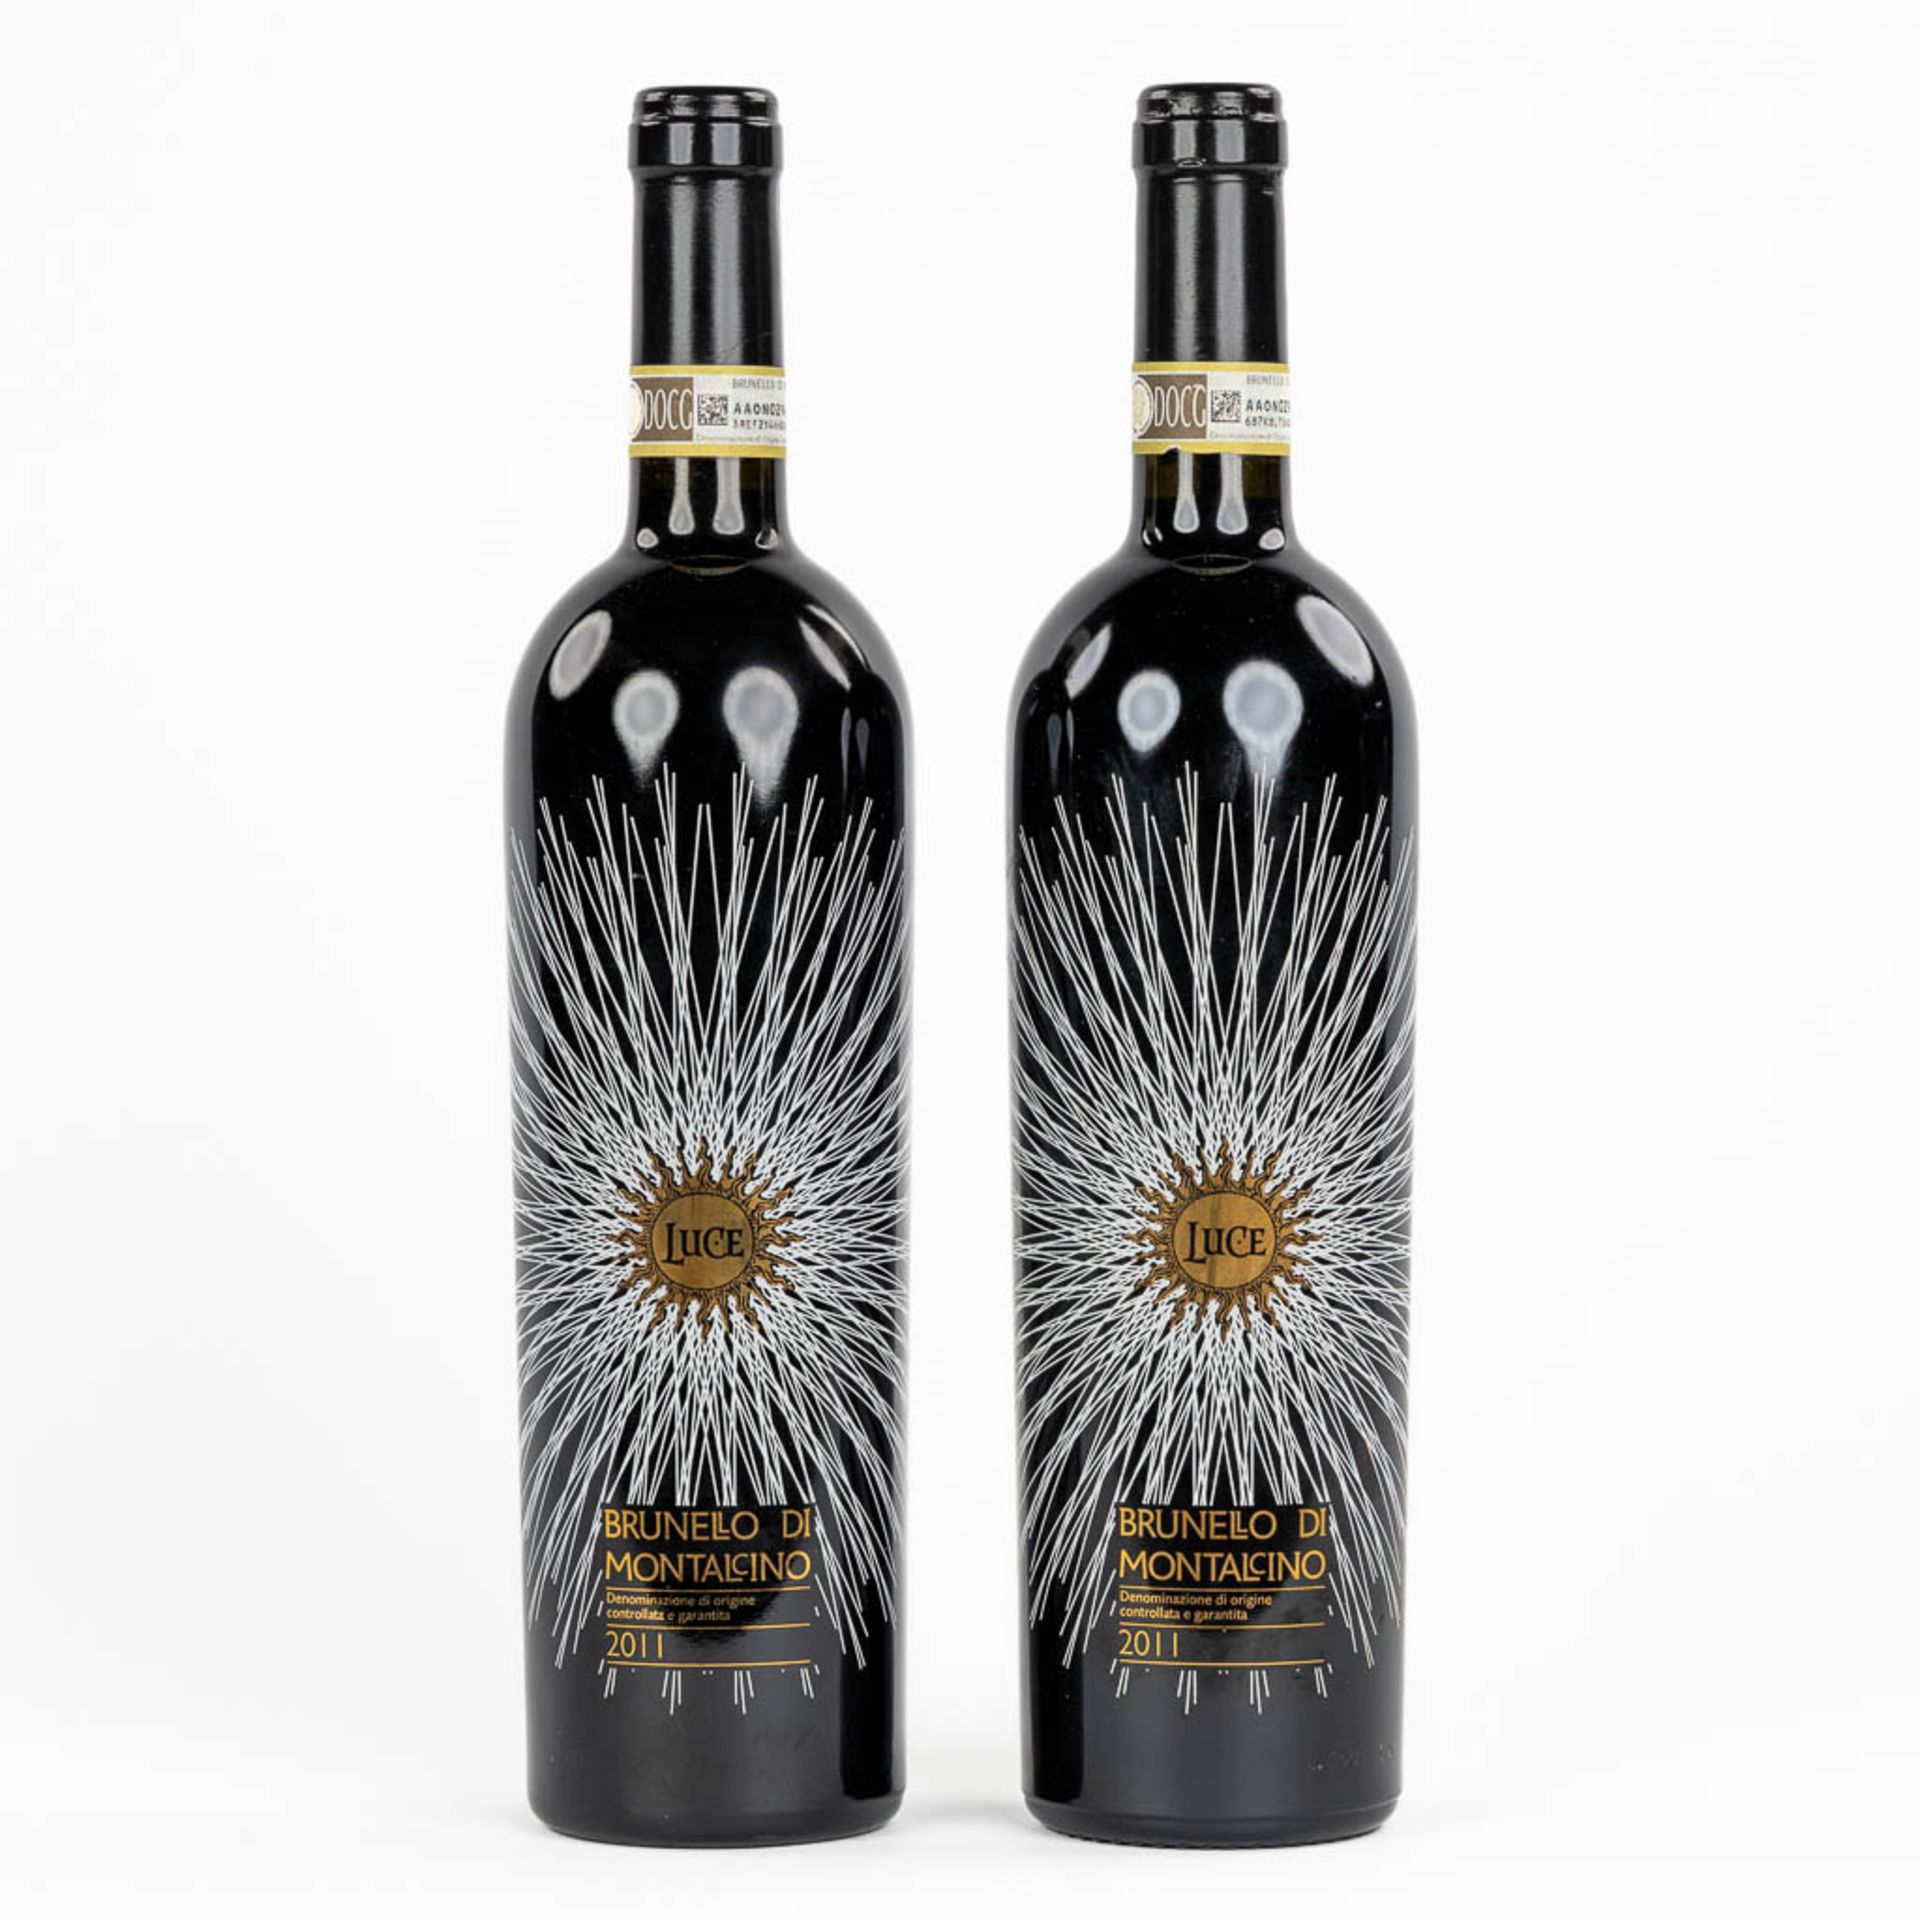 2011 Luce Brunello Di Montalcino, 2 bottles.